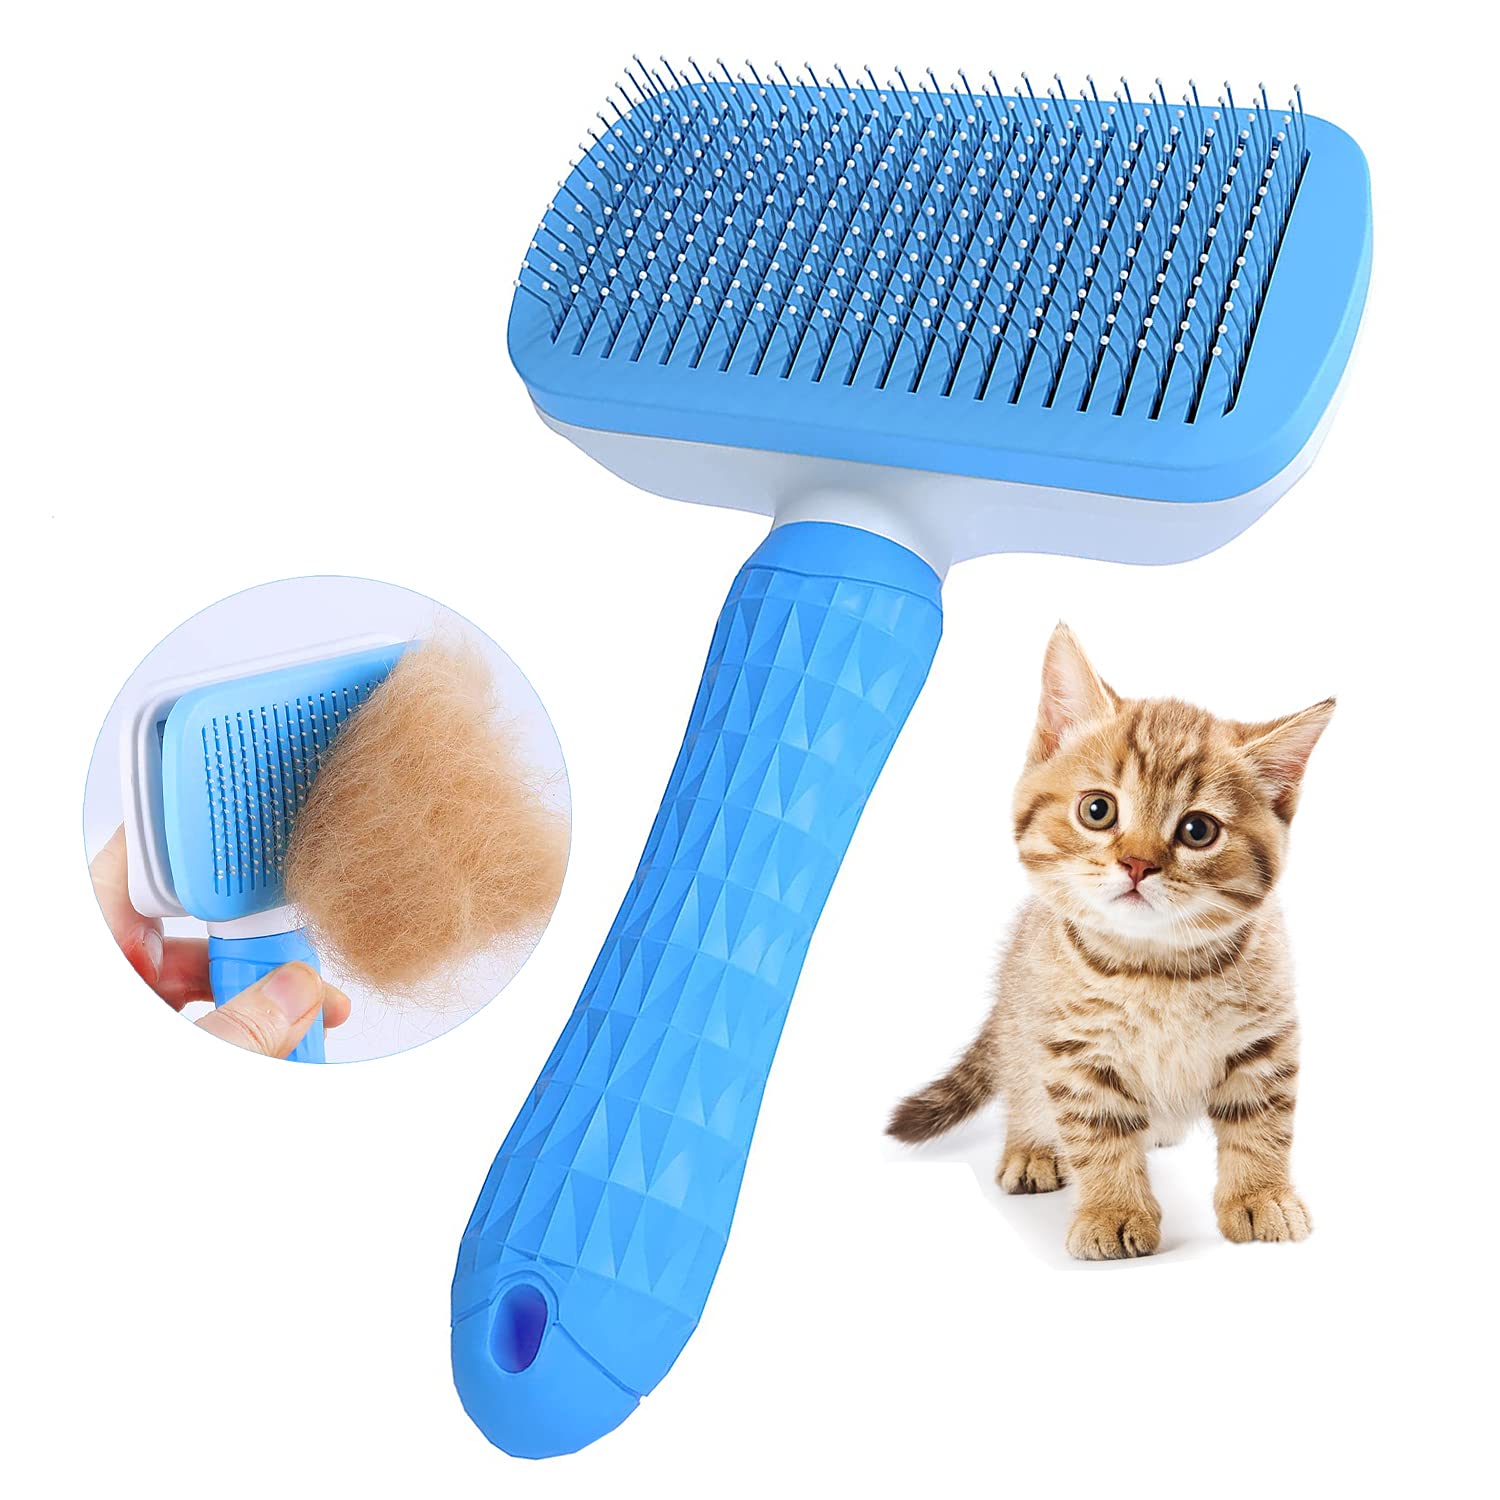 Pet Grooming Brushes